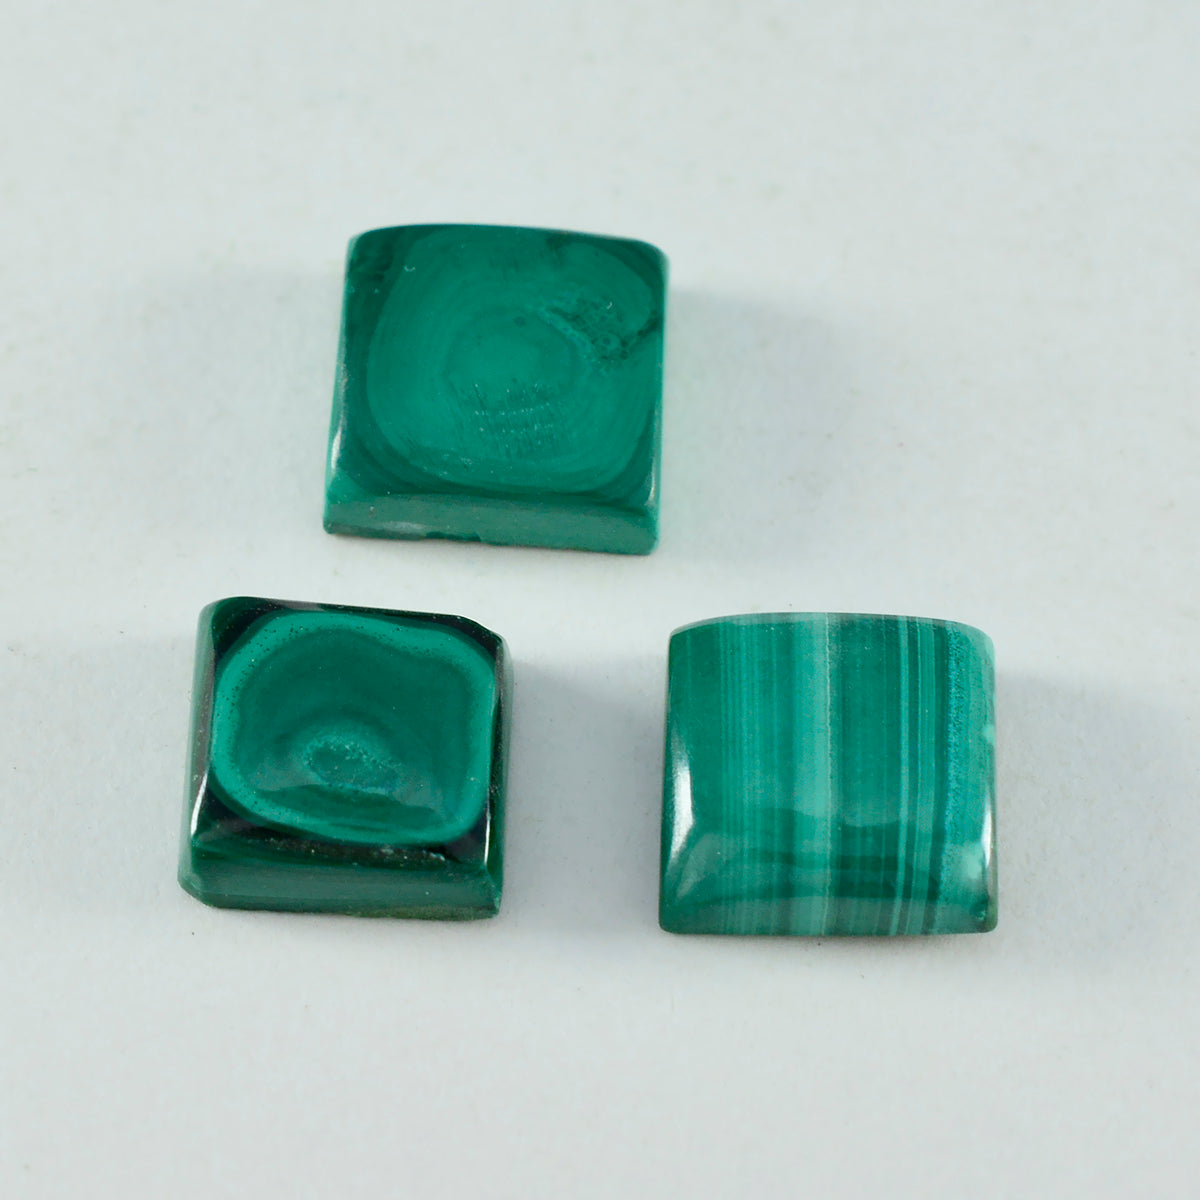 riyogems 1pc グリーン マラカイト カボション 14x14 mm 正方形 a1 品質の宝石